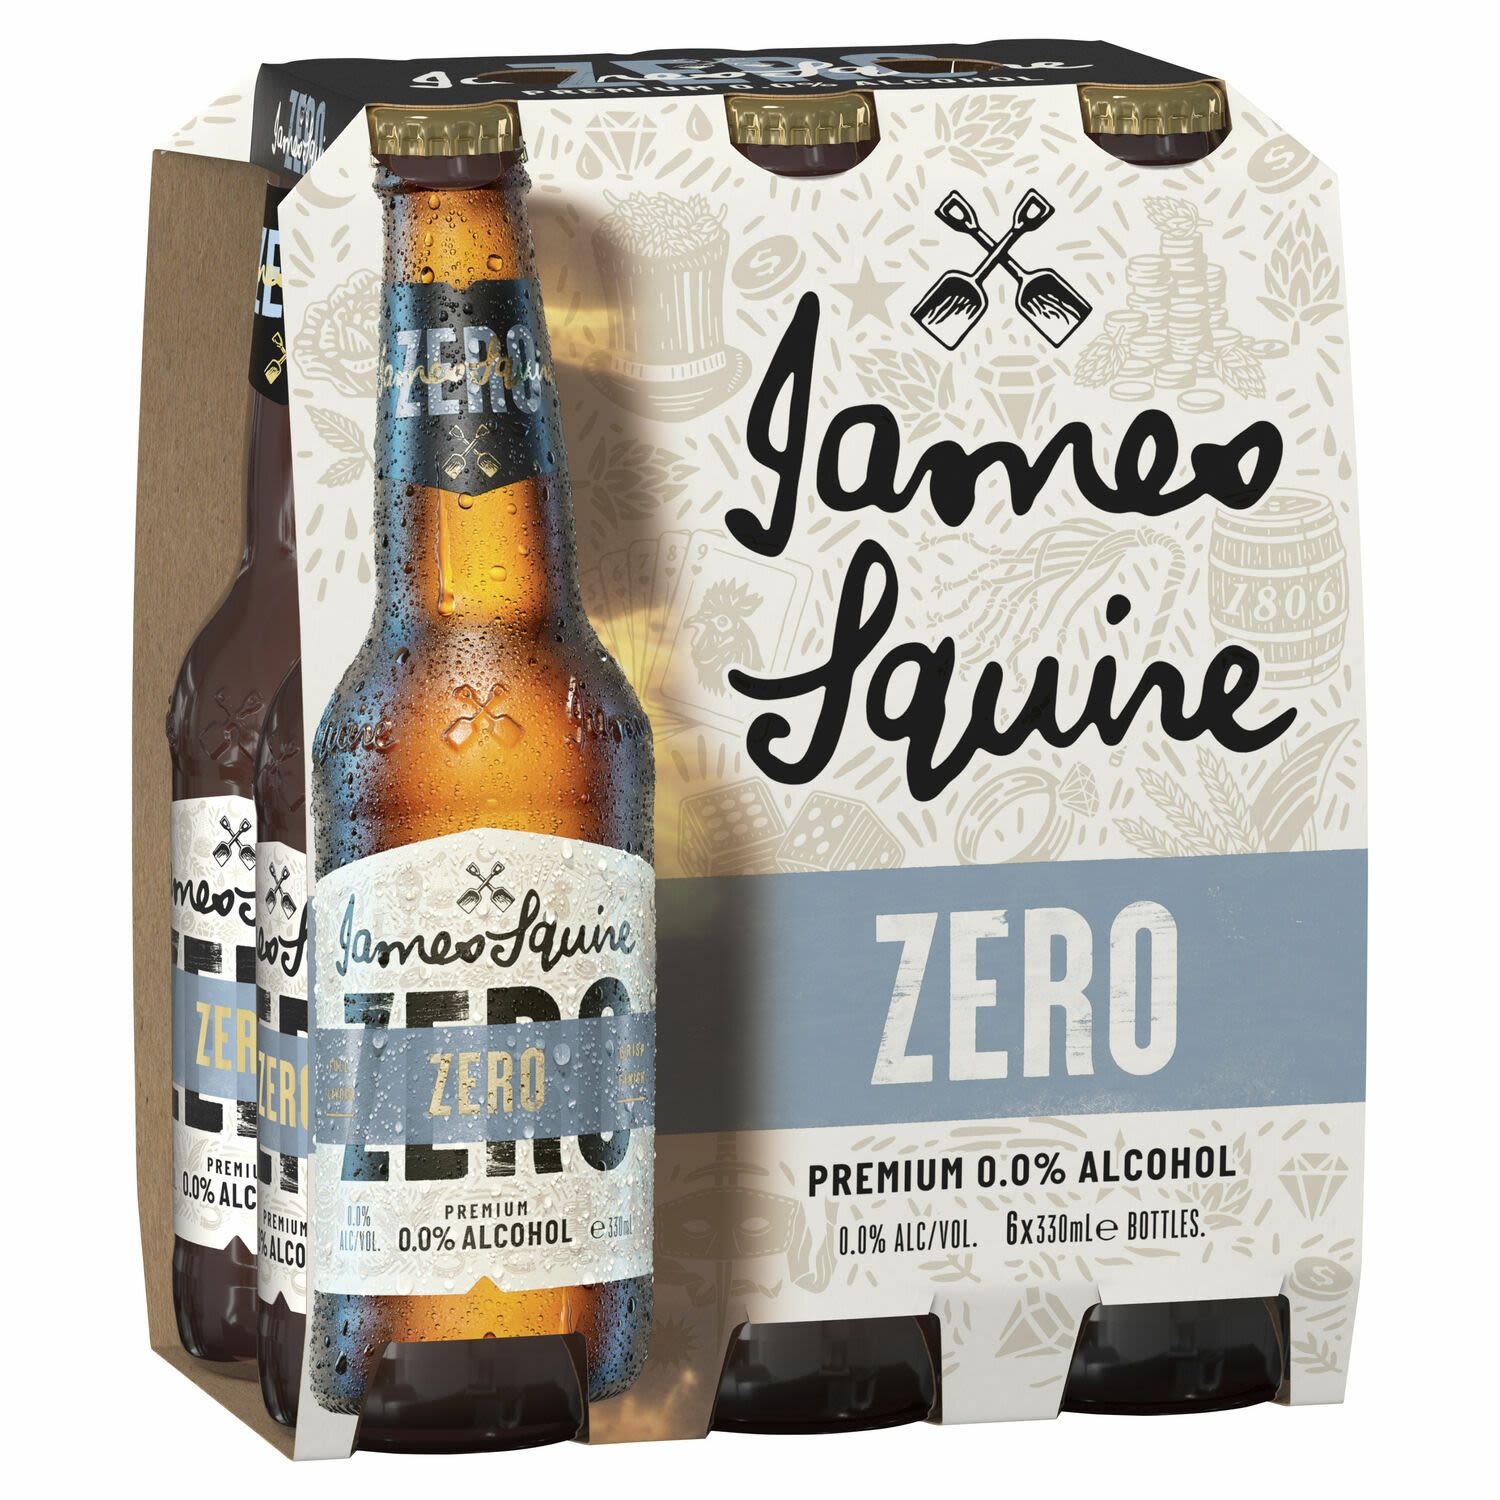 James Squire ZERO Bottle 330mL 6 Pack